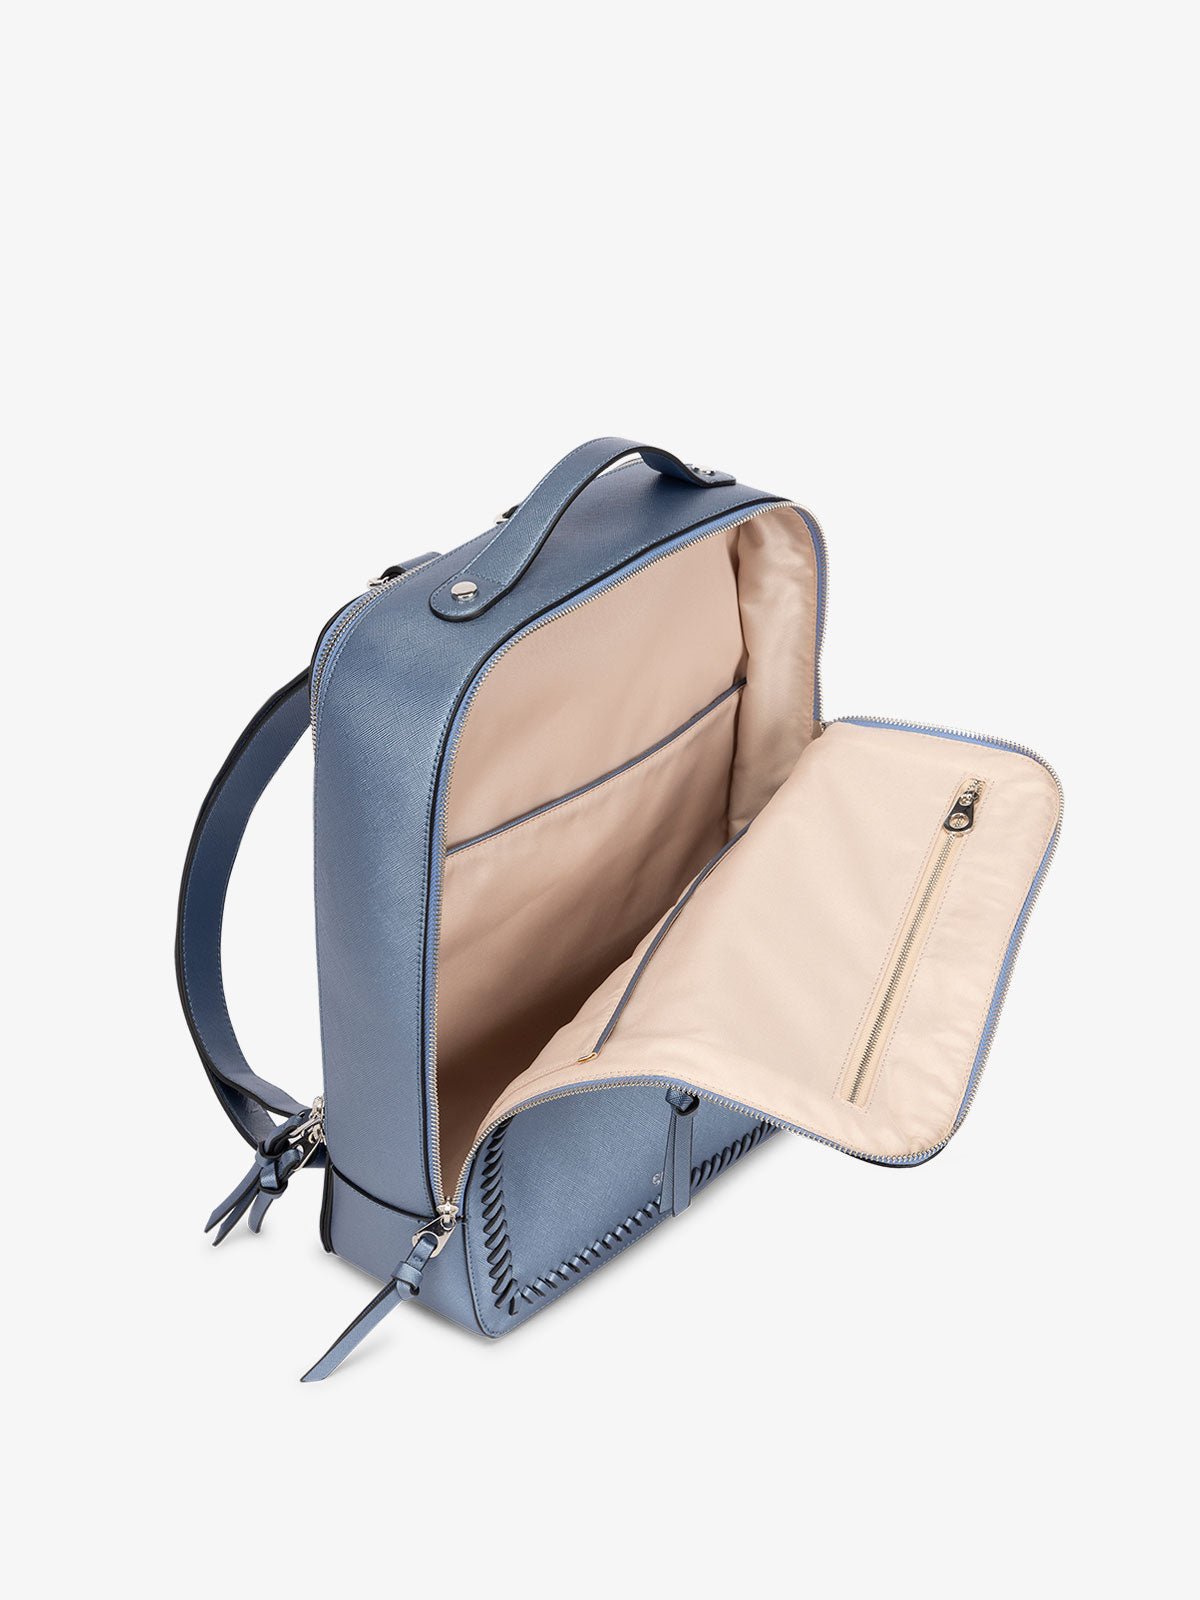 CALPAK Kaya Laptop Backpack with top handle, adjustable straps and multiple pockets in stargaze